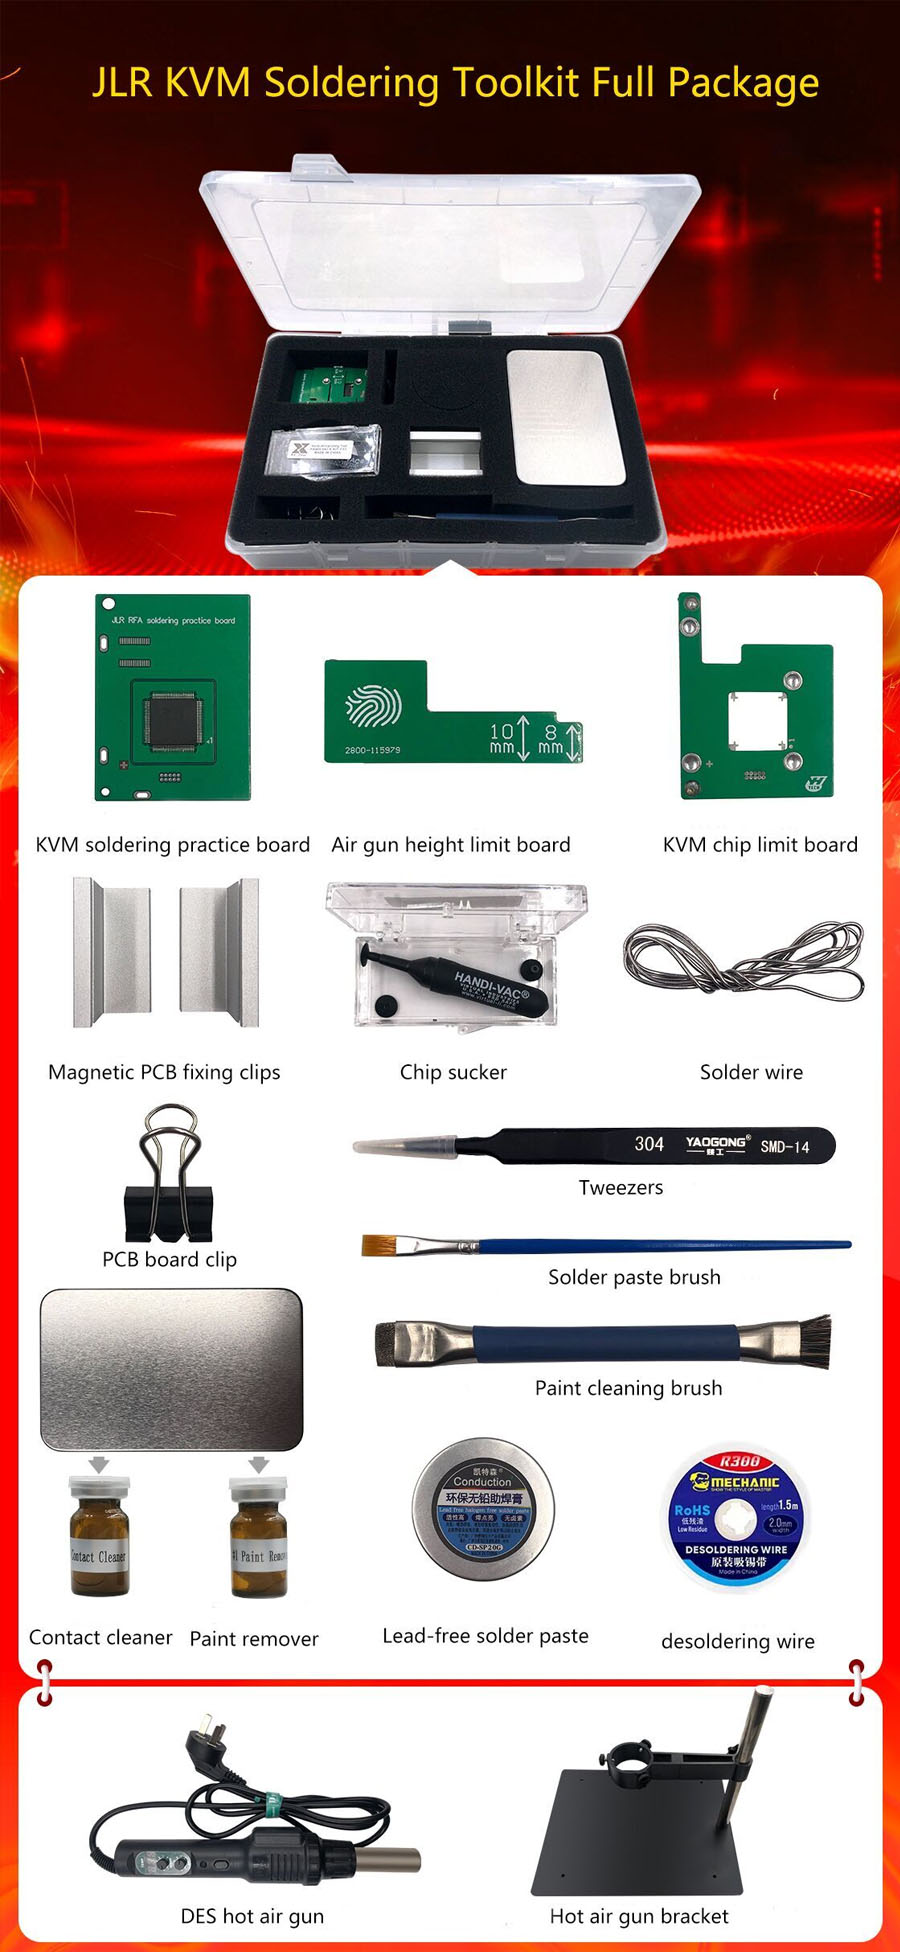 yanhua-jlr-kvm-soldering-toolkit-gull-package